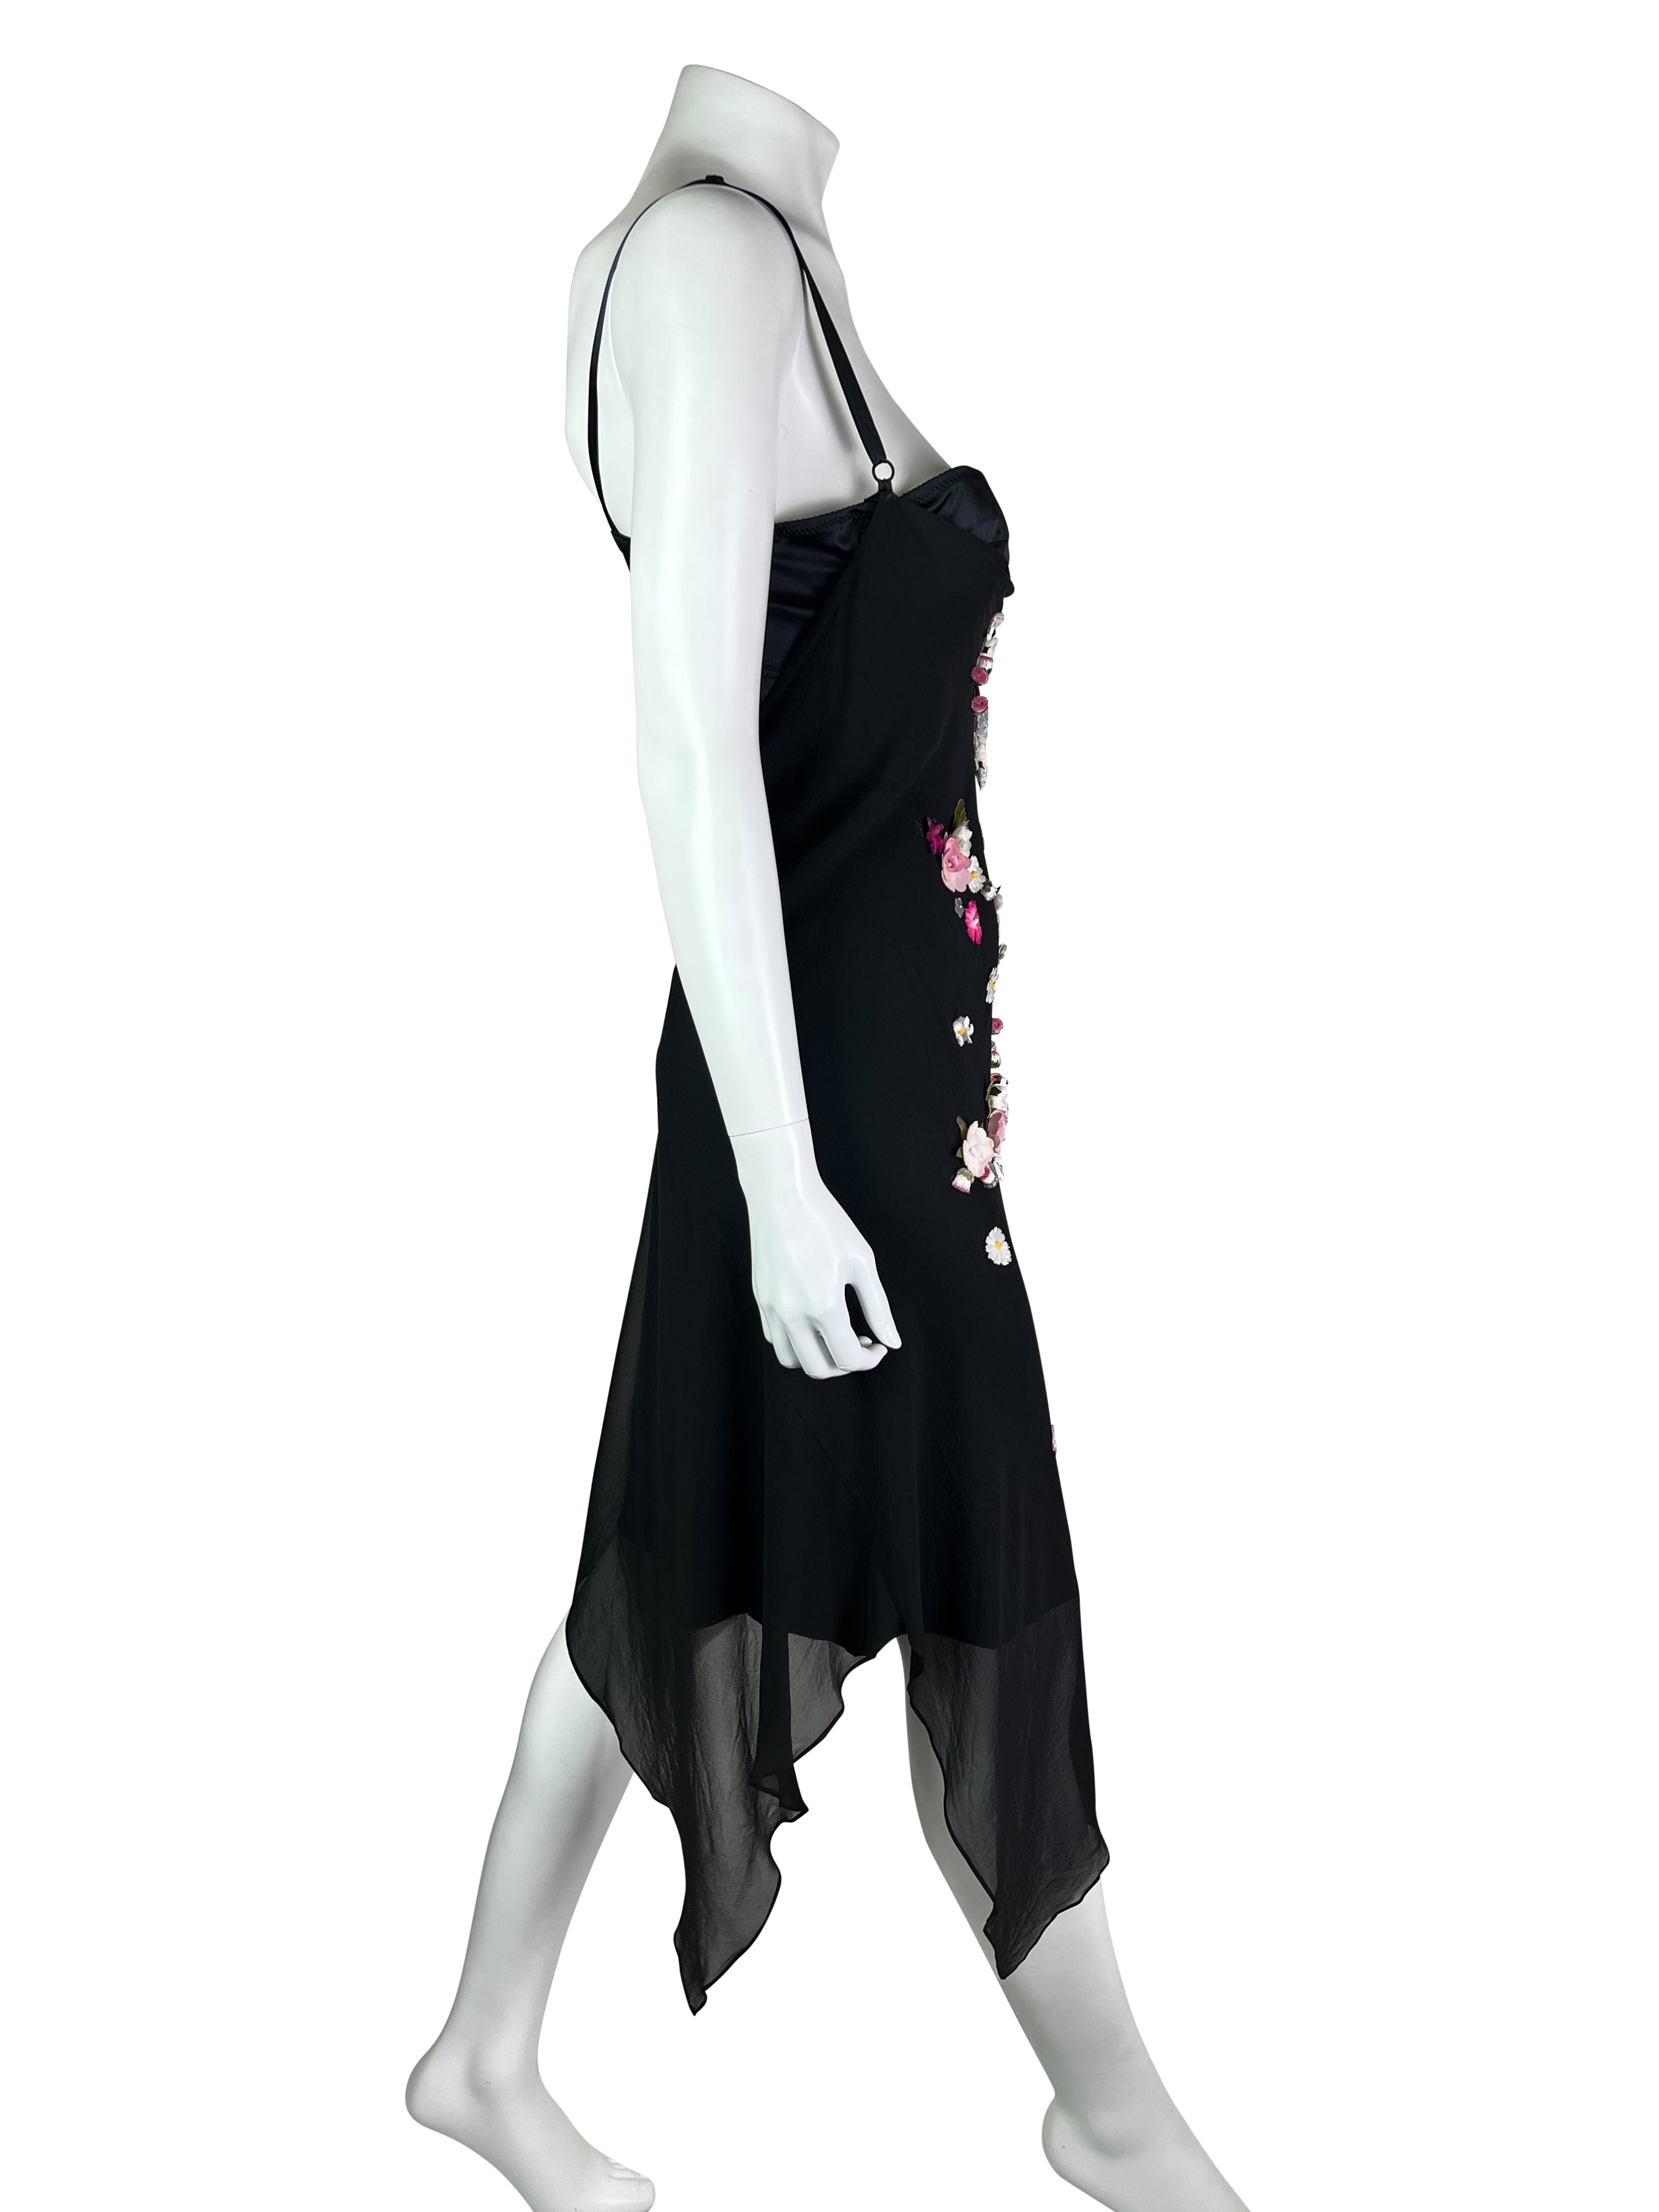 Dolce & Gabbana Fall 1999 Appliqué Silk Dress